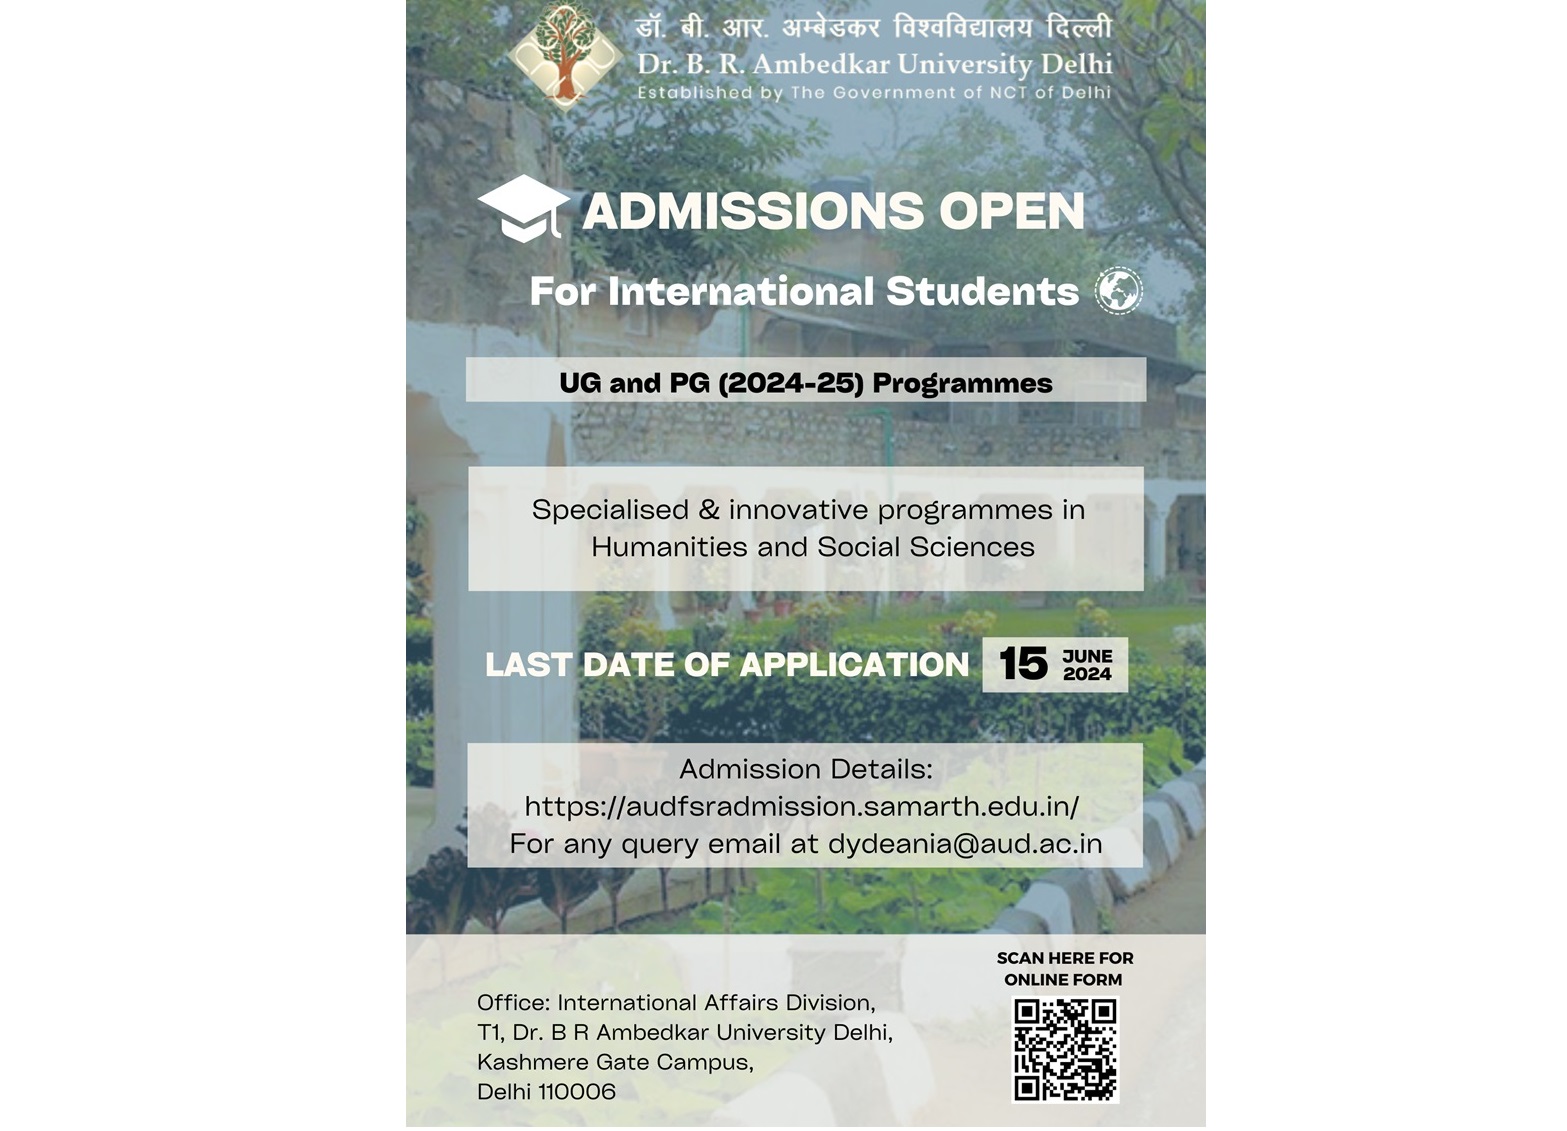 UG & PG Admissions Open for International Students at Dr B.R. Ambedkar University Delhi (India)- Register for Virtual Open House on 31st May, Application Deadline - 15th June